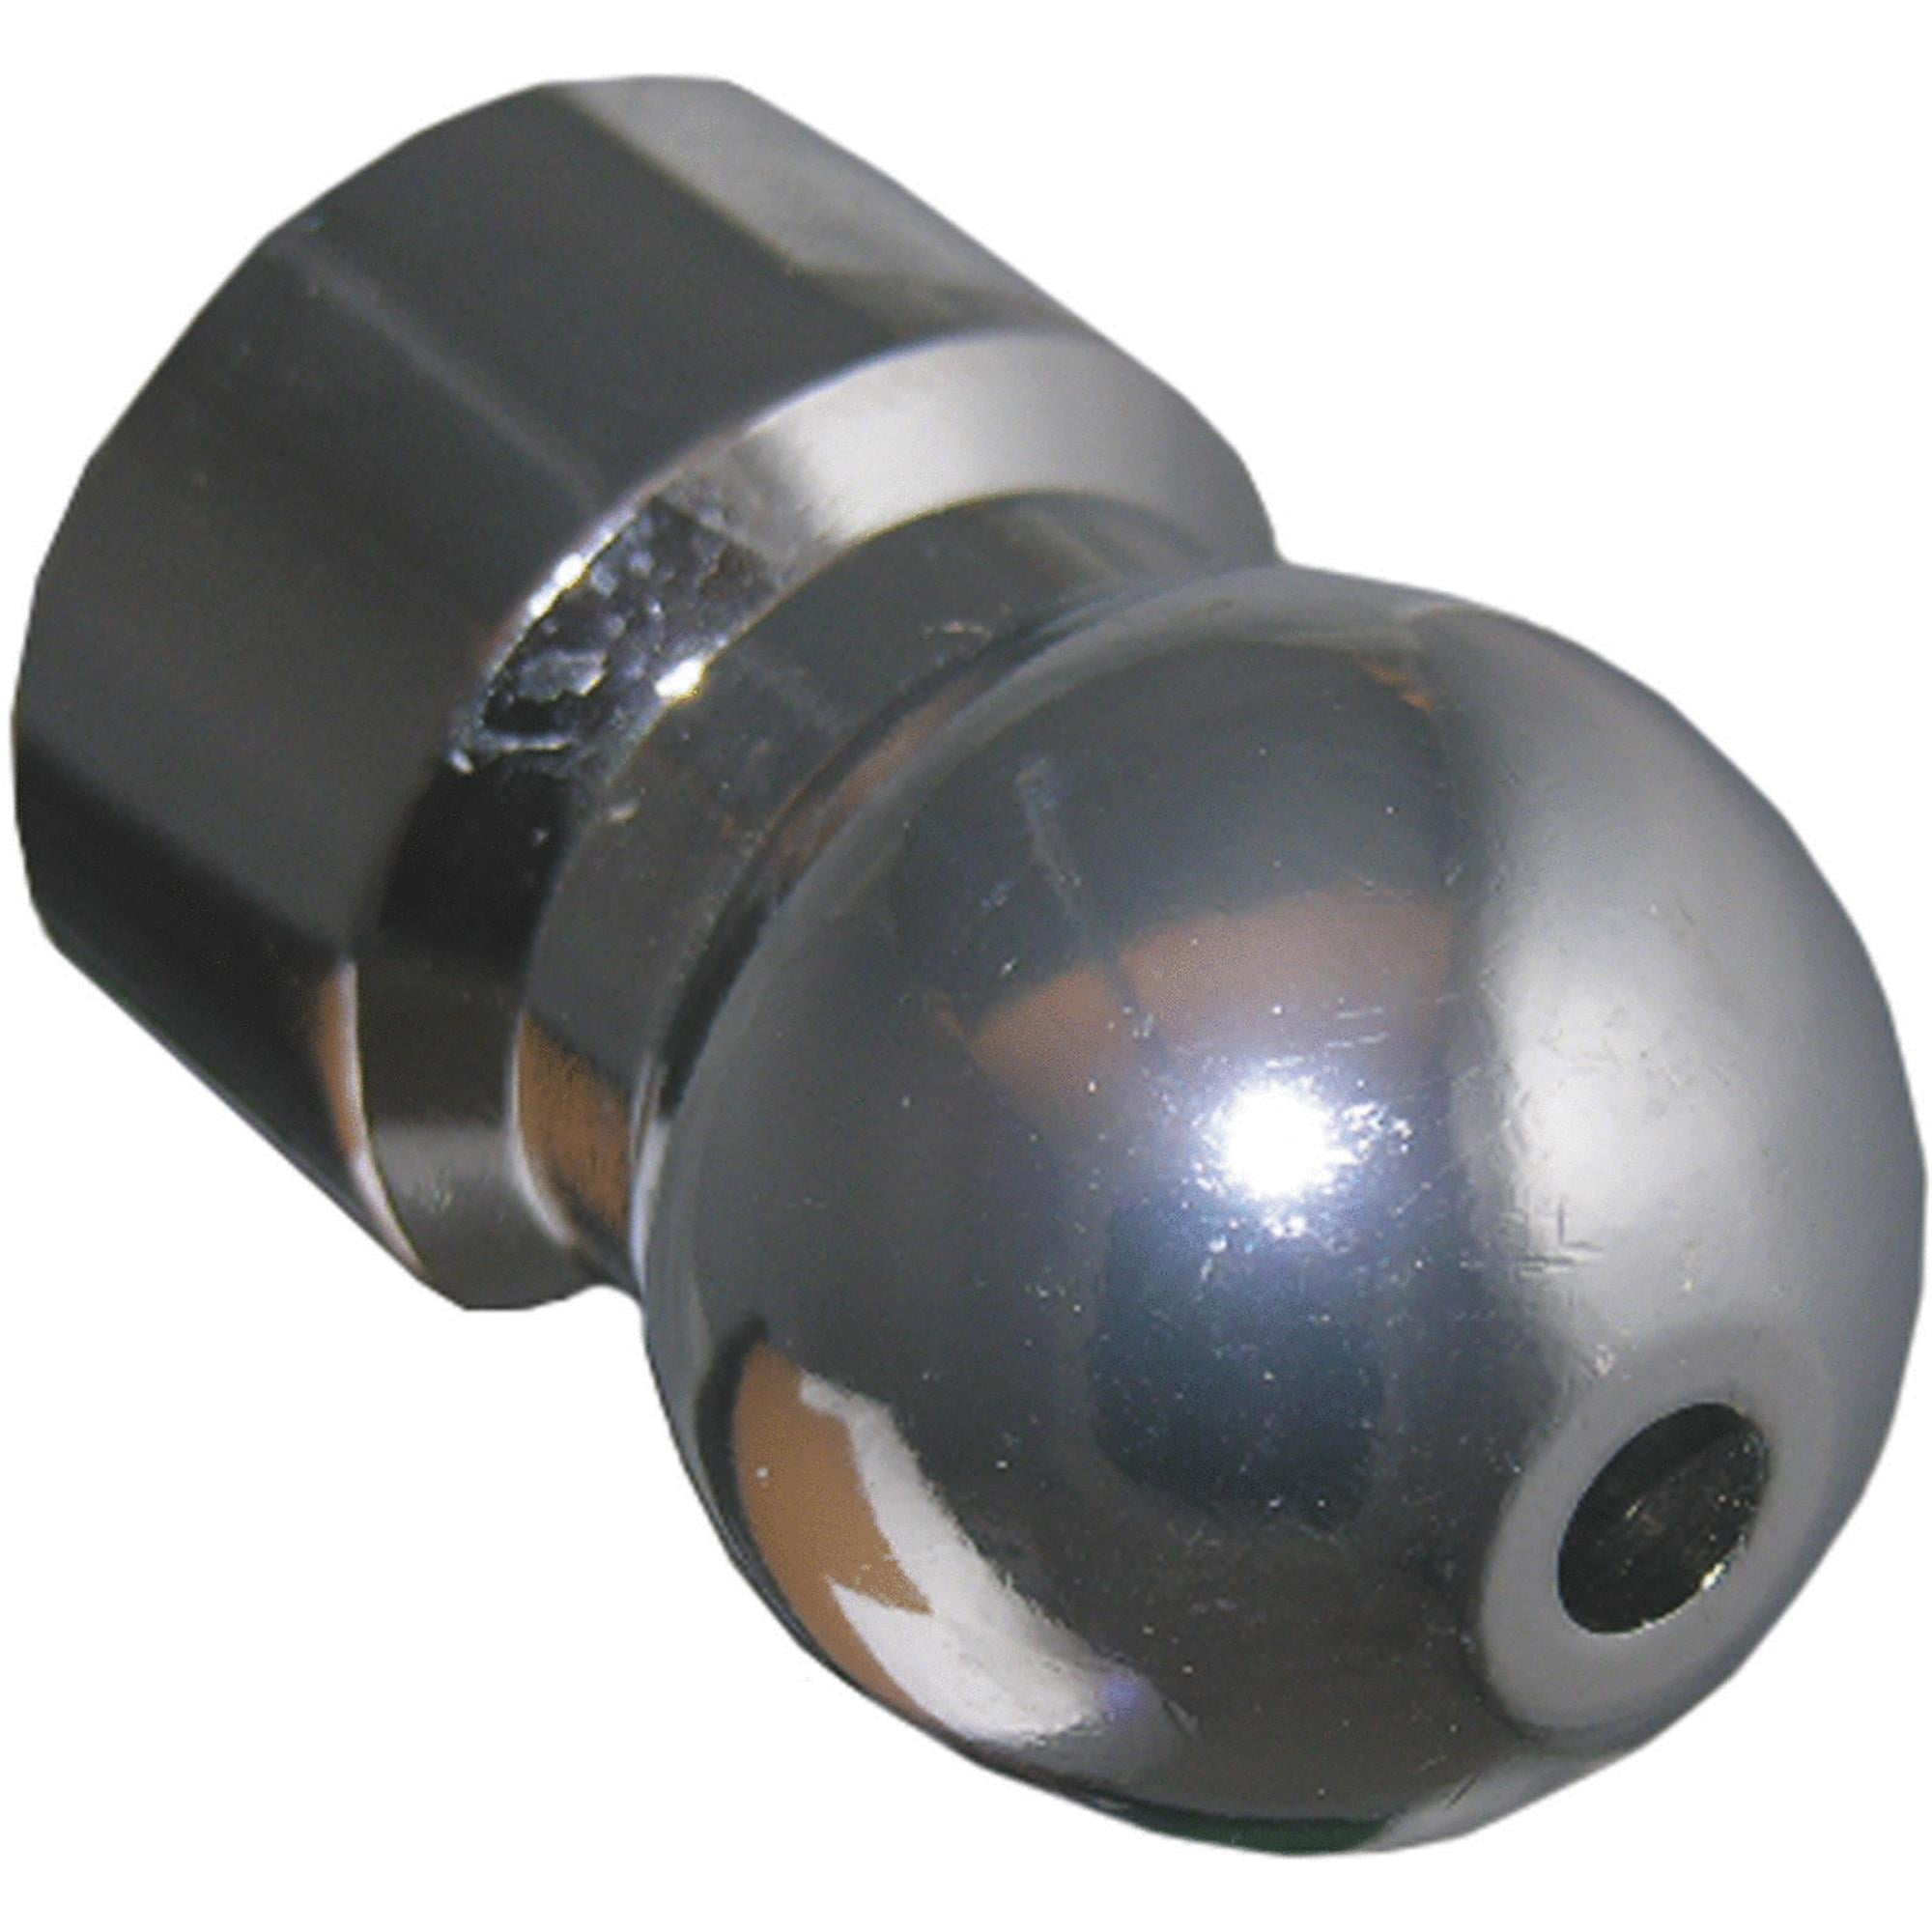 KLXHOME Shower Head Swivel Ball Adapter Shower Connector Ball Joint Brass Adjust 